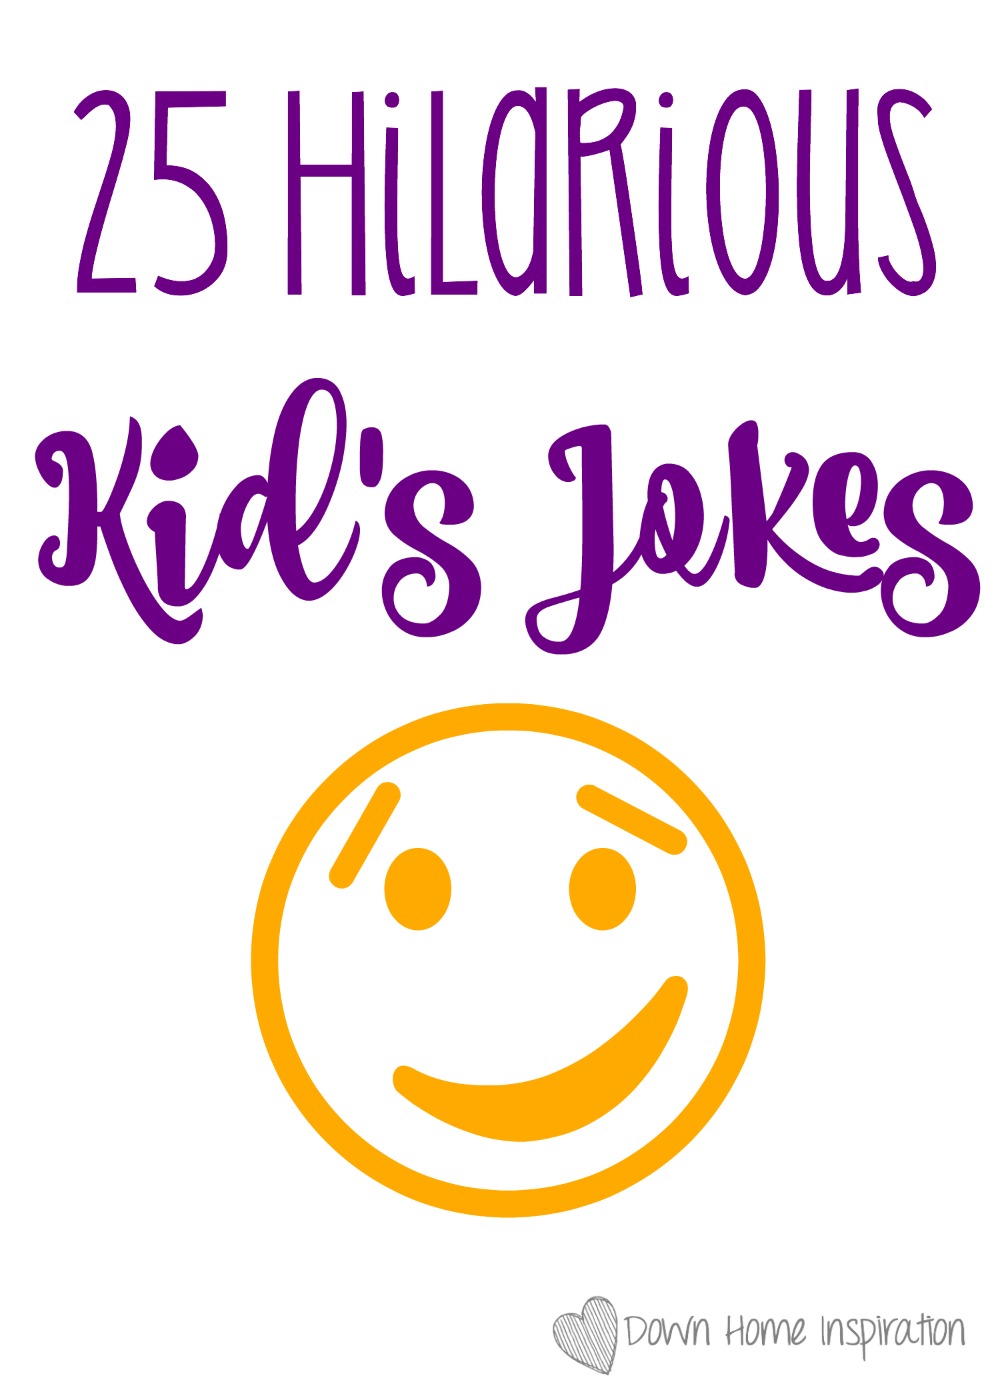 25 Hilarious Kid's Jokes - Down Home Inspiration